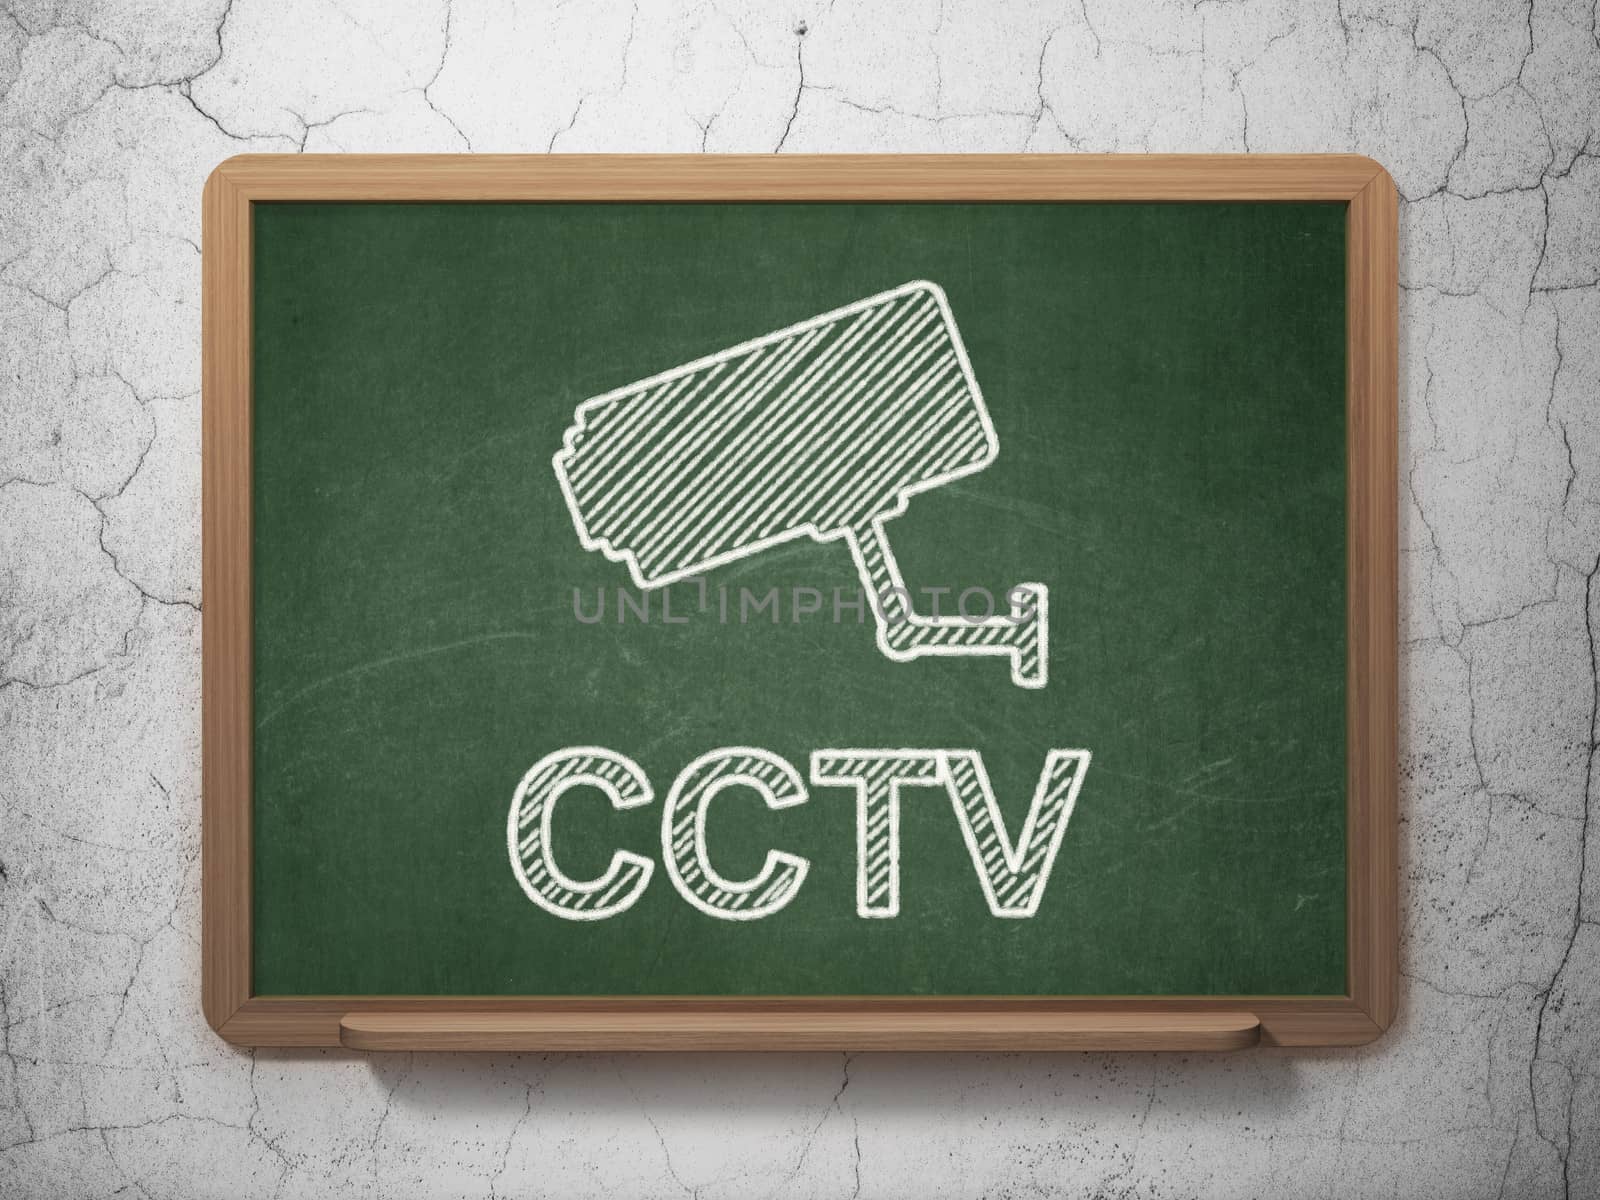 Security concept: Cctv Camera and CCTV on chalkboard background by maxkabakov